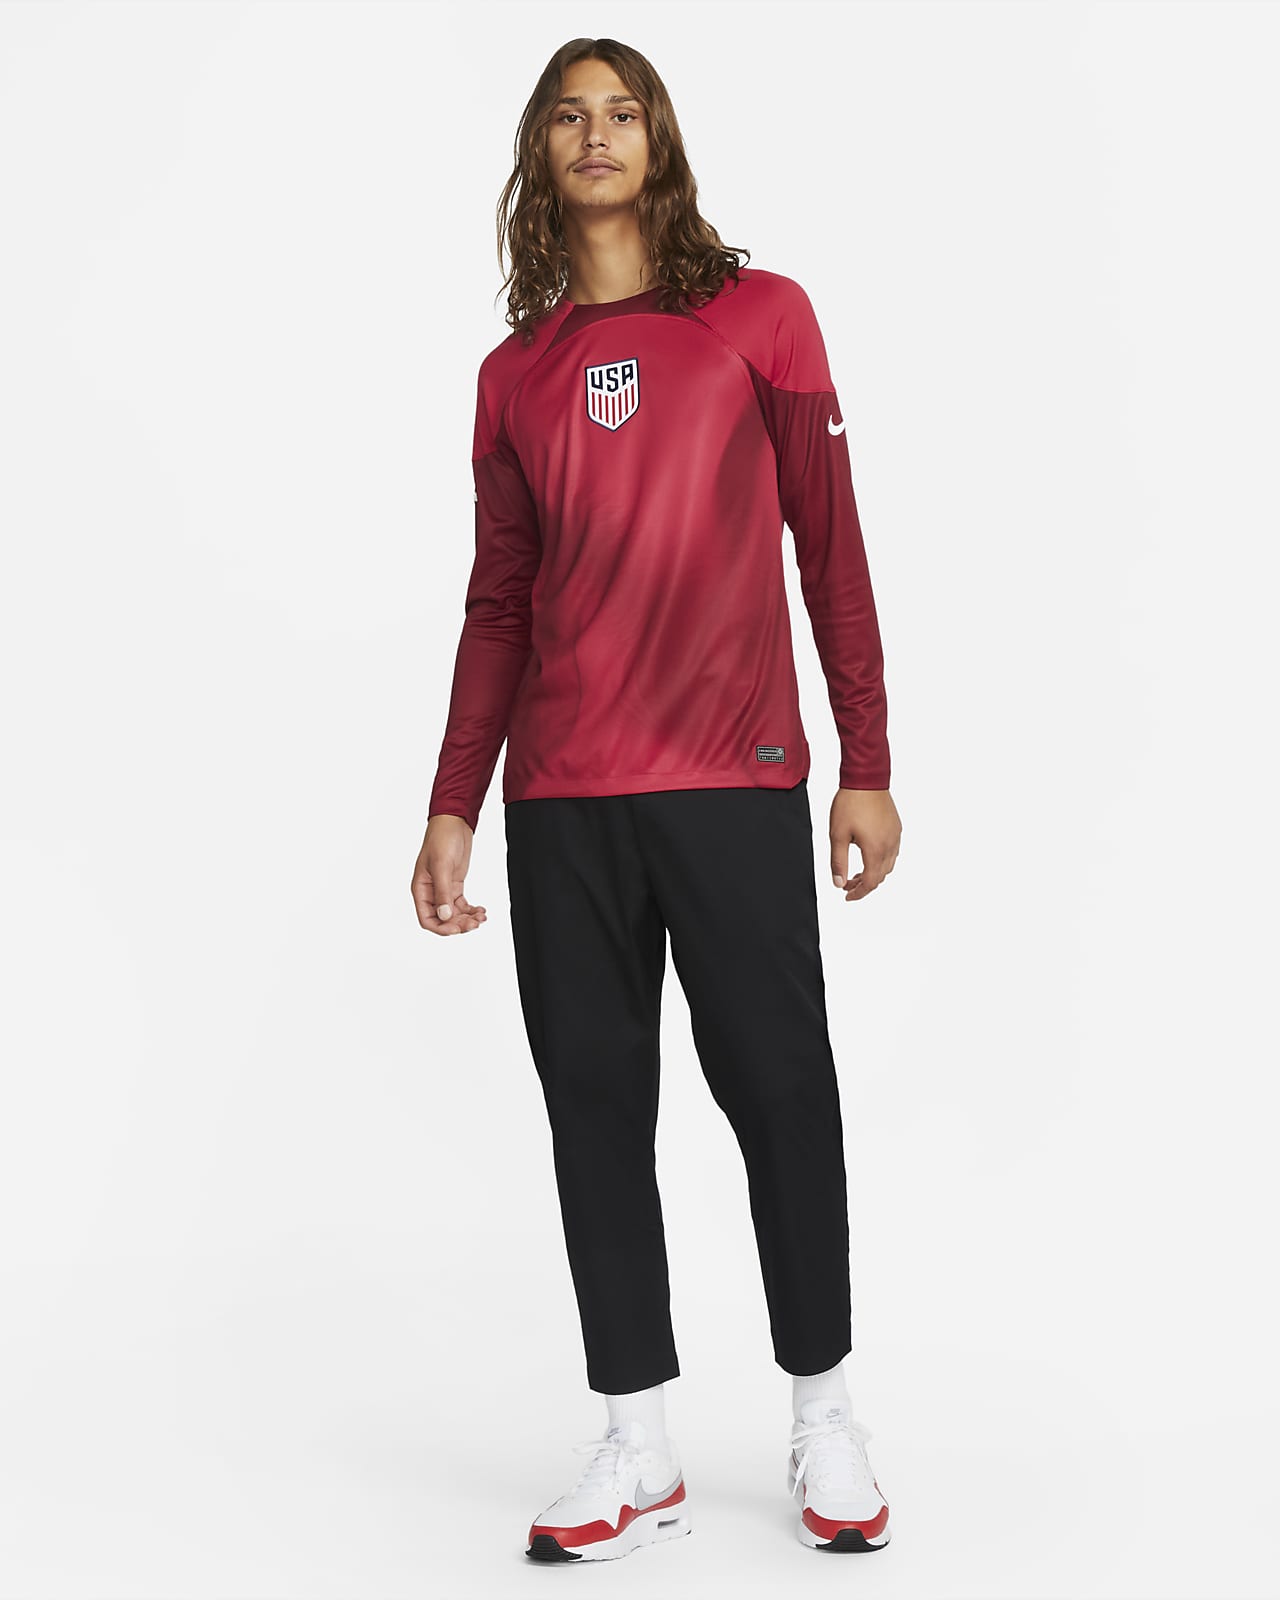 U.S. 2022/23 Stadium Goalkeeper Men's Nike Dri-Fit Soccer Jersey